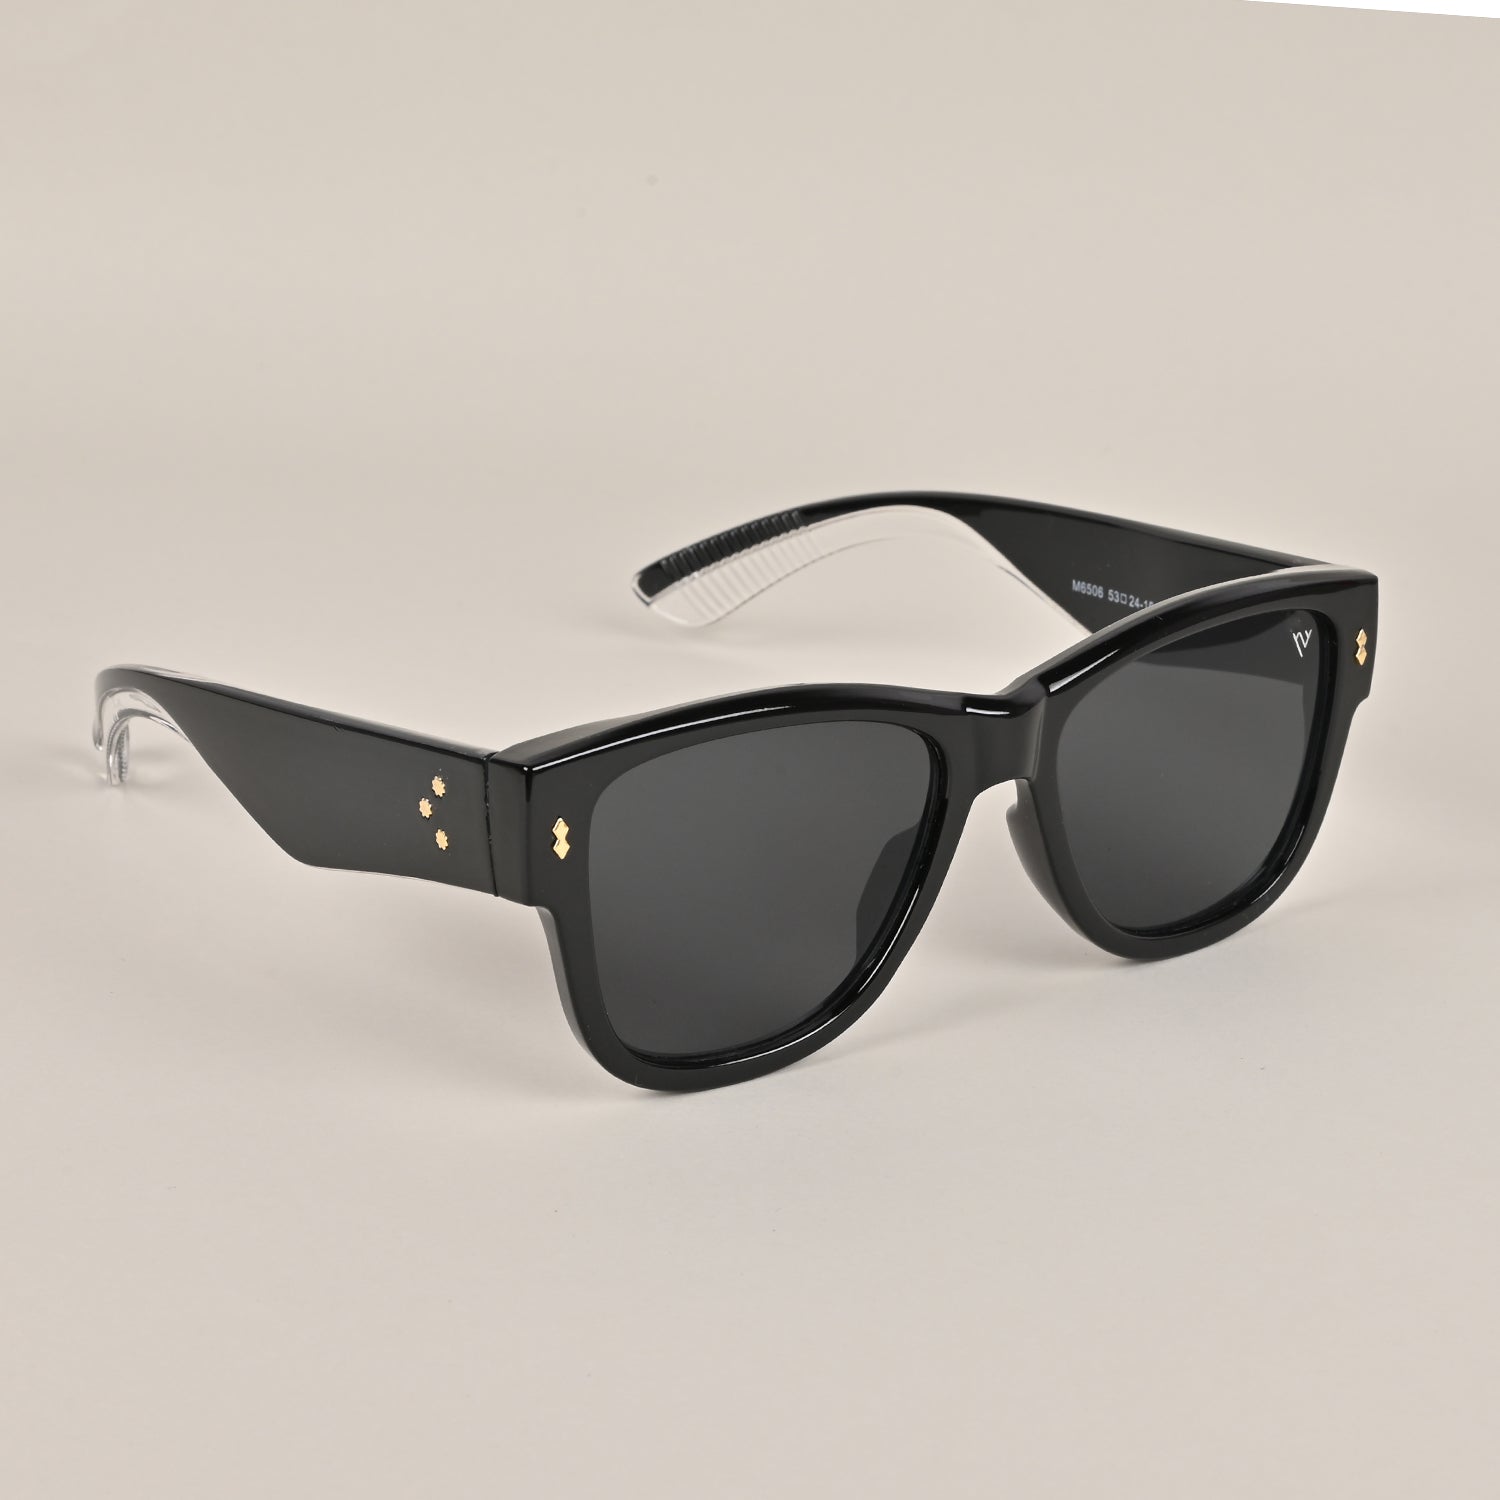 Voyage Black Oval Sunglasses - MG3825